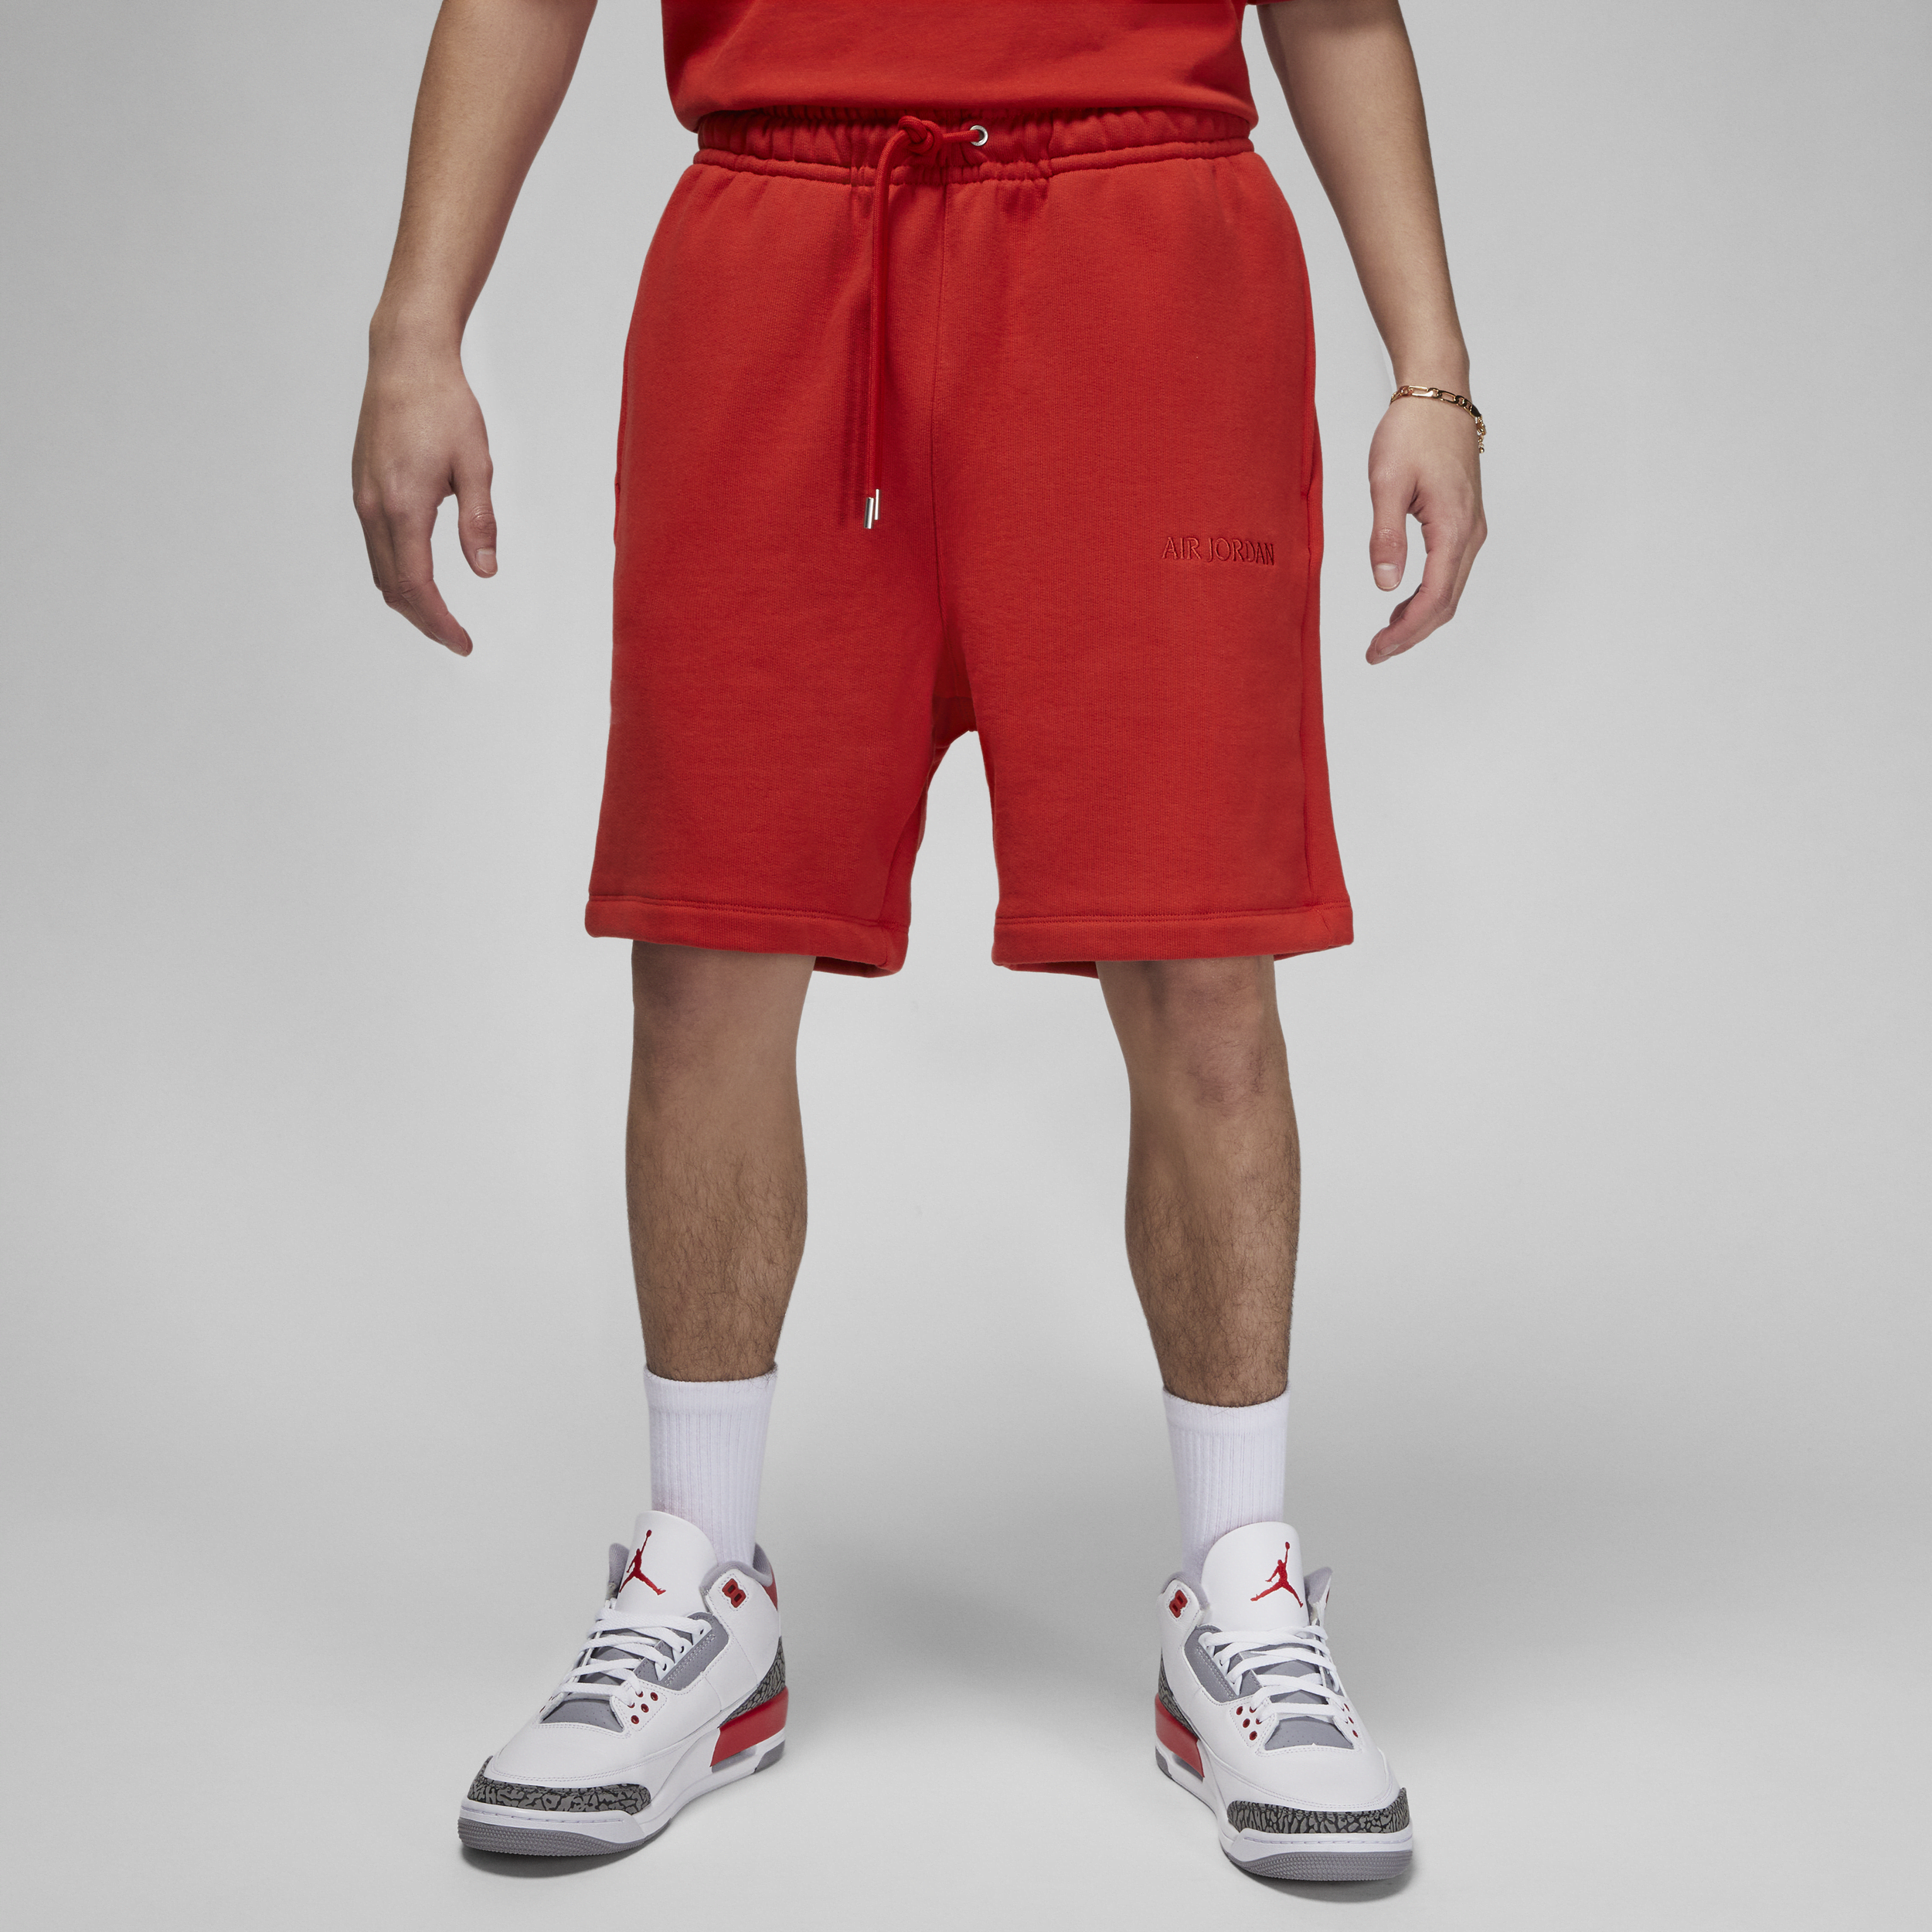 Nike Shorts in fleece Air Jordan Wordmark – Uomo - Rosso